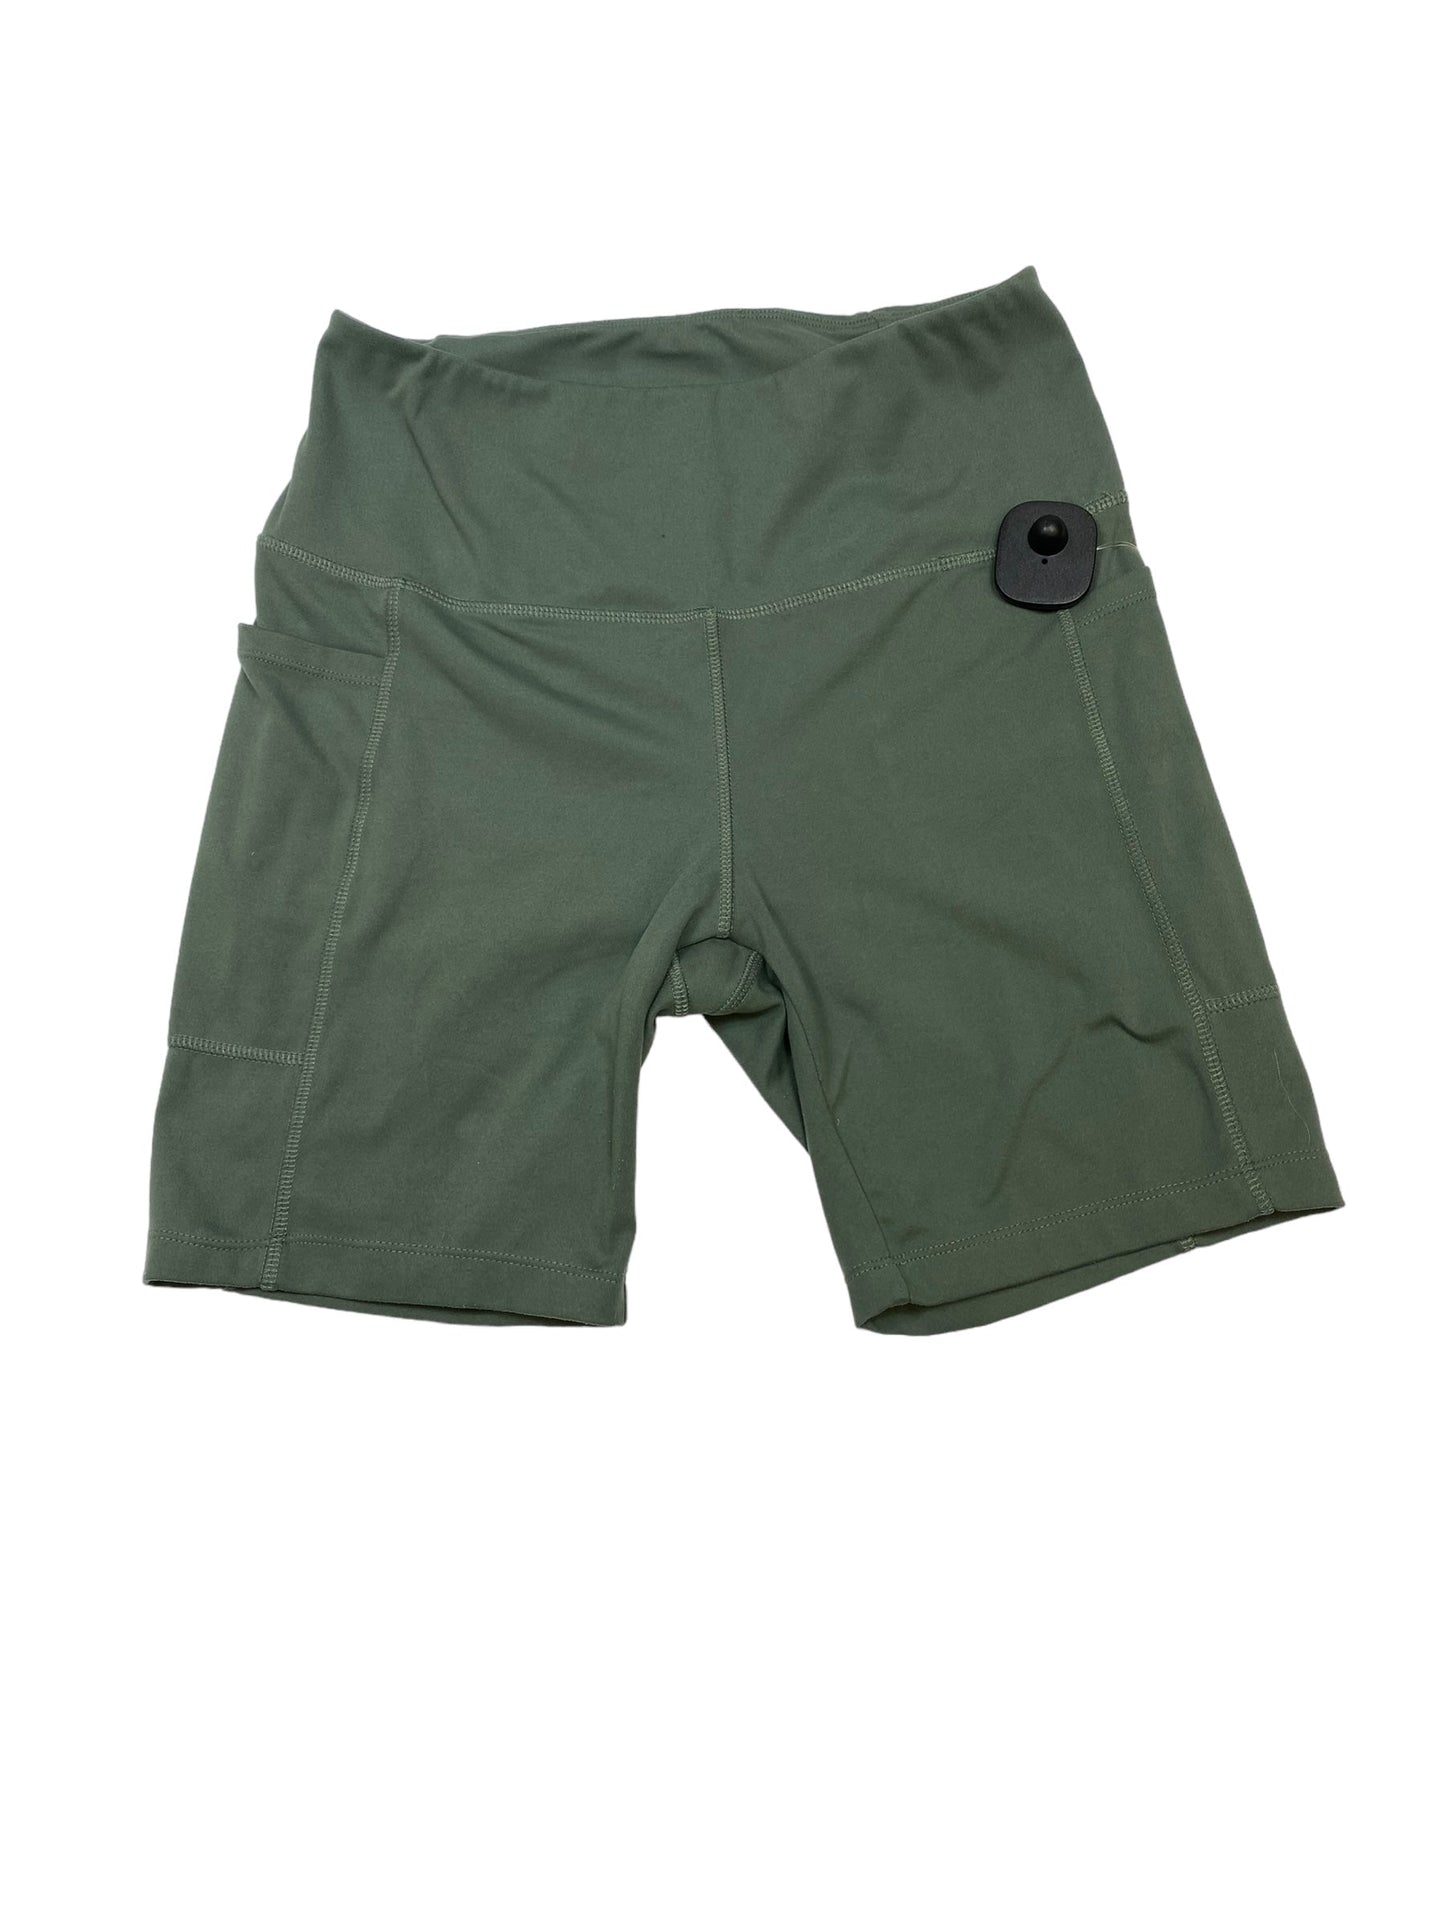 Green Athletic Shorts Danskin, Size M